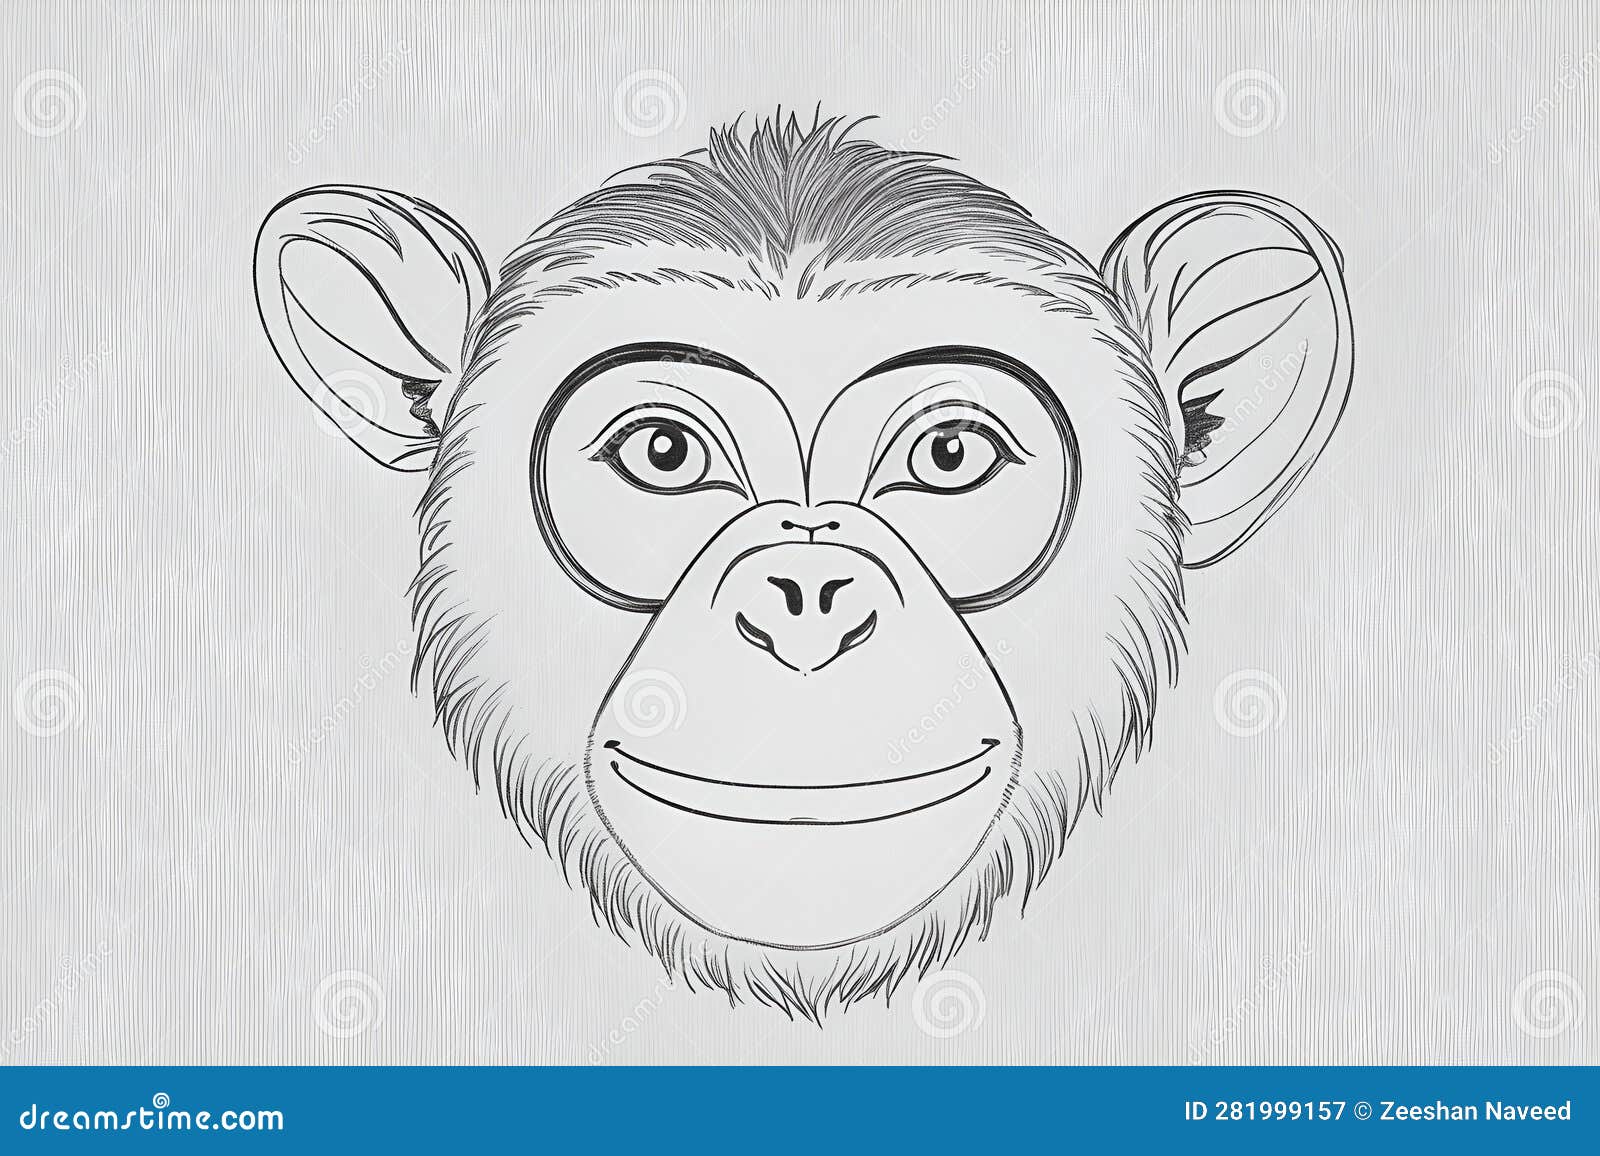 How to Draw a Monkey Face  HelloArtsy